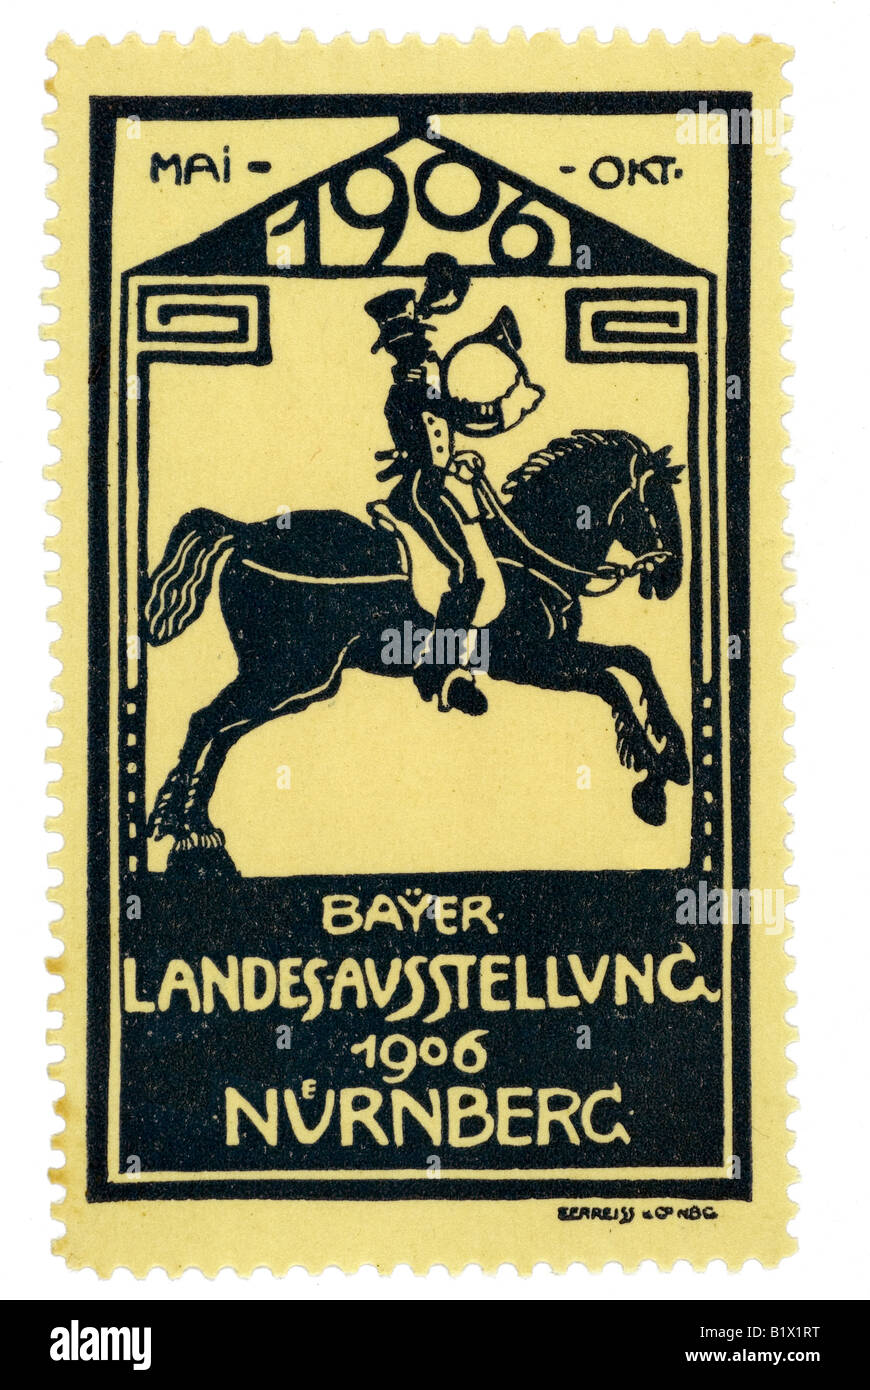 1906 Bayer Landesausstellung Nürnberg Stock Photo